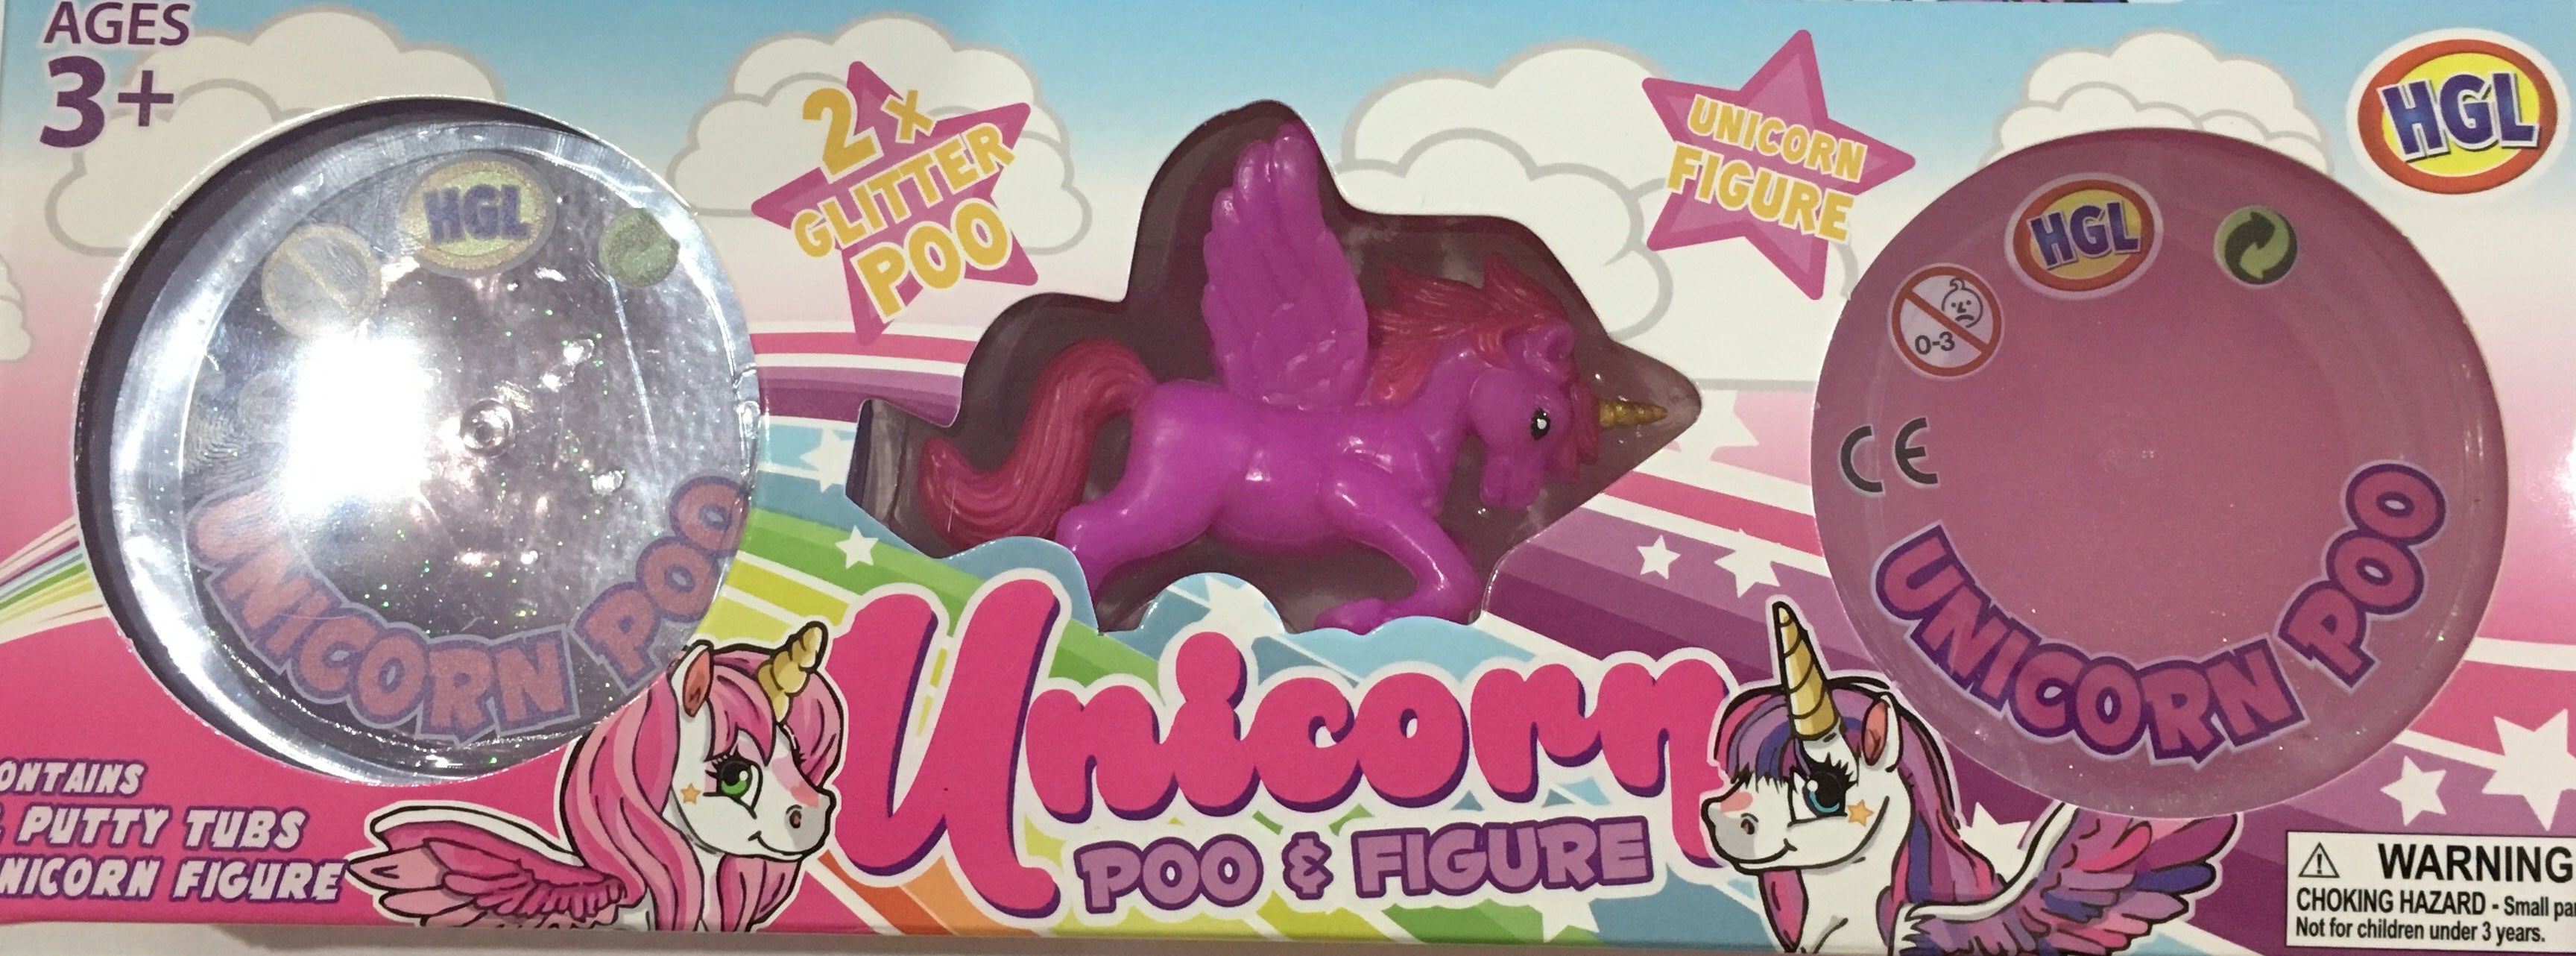 Unicorn Poo & Figure Set